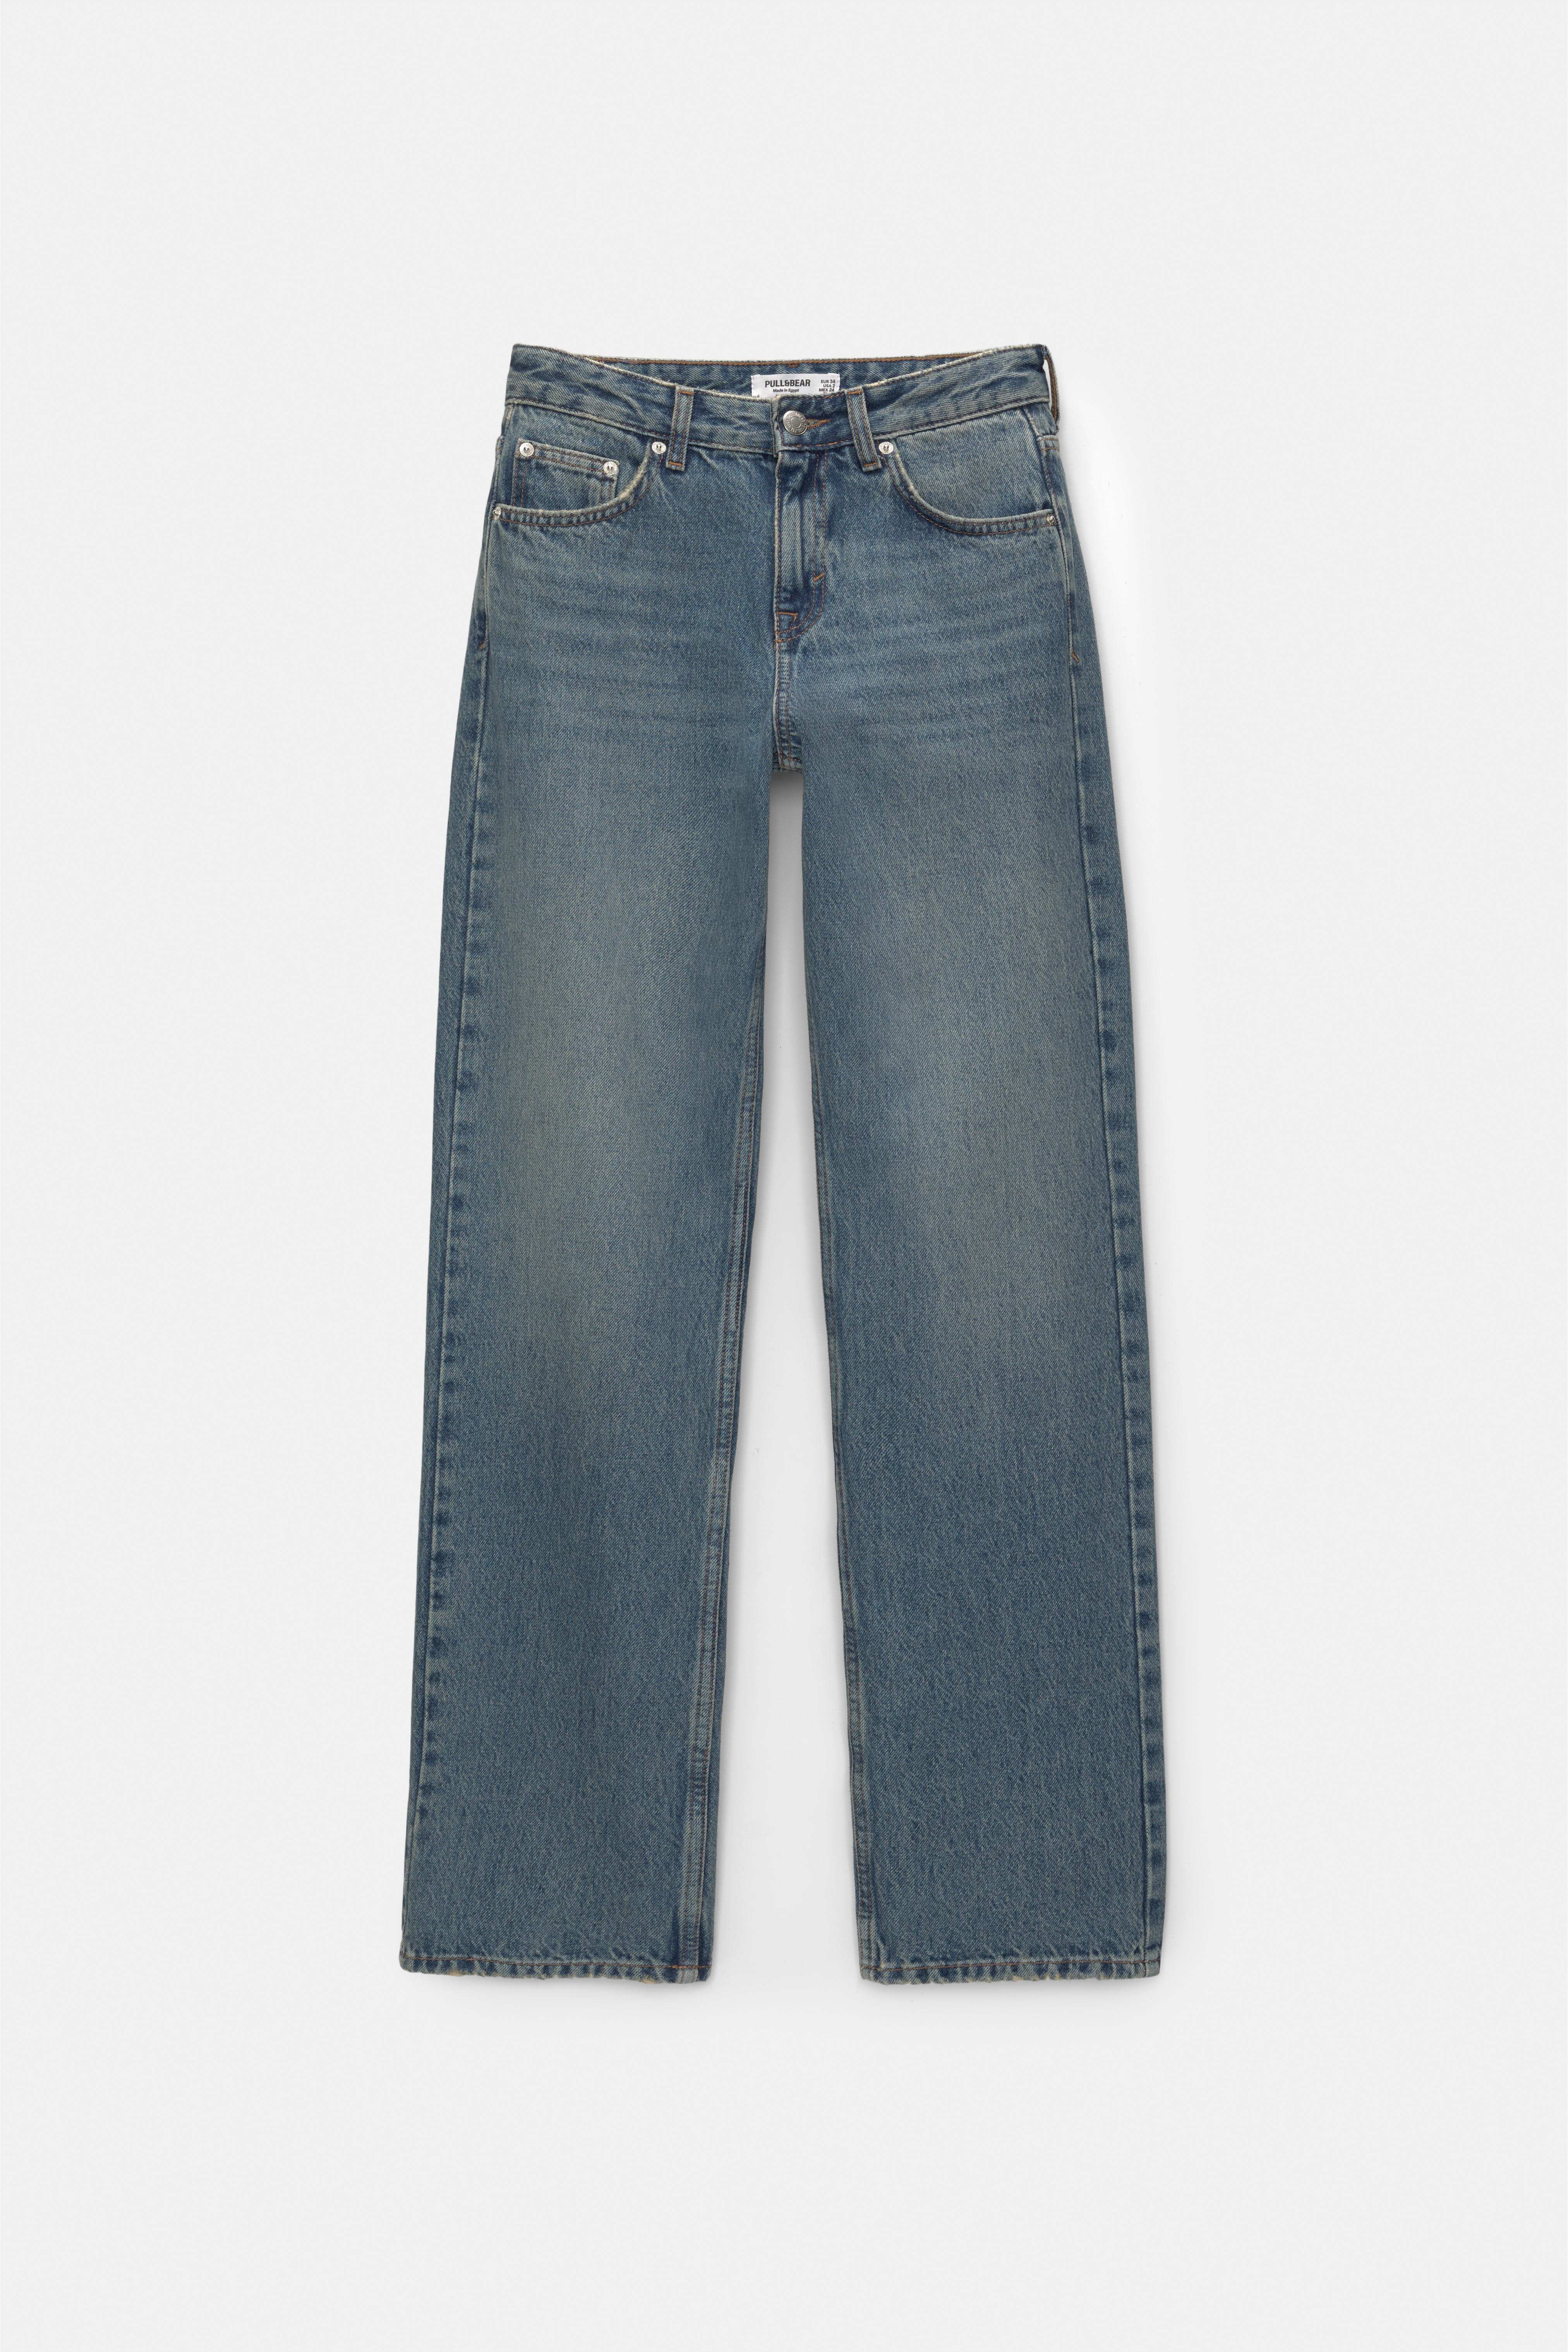 Pull&Bear Mens Skinny Fit Jeans. Size MEX 32/ EUR 42. Green. Denim. | eBay